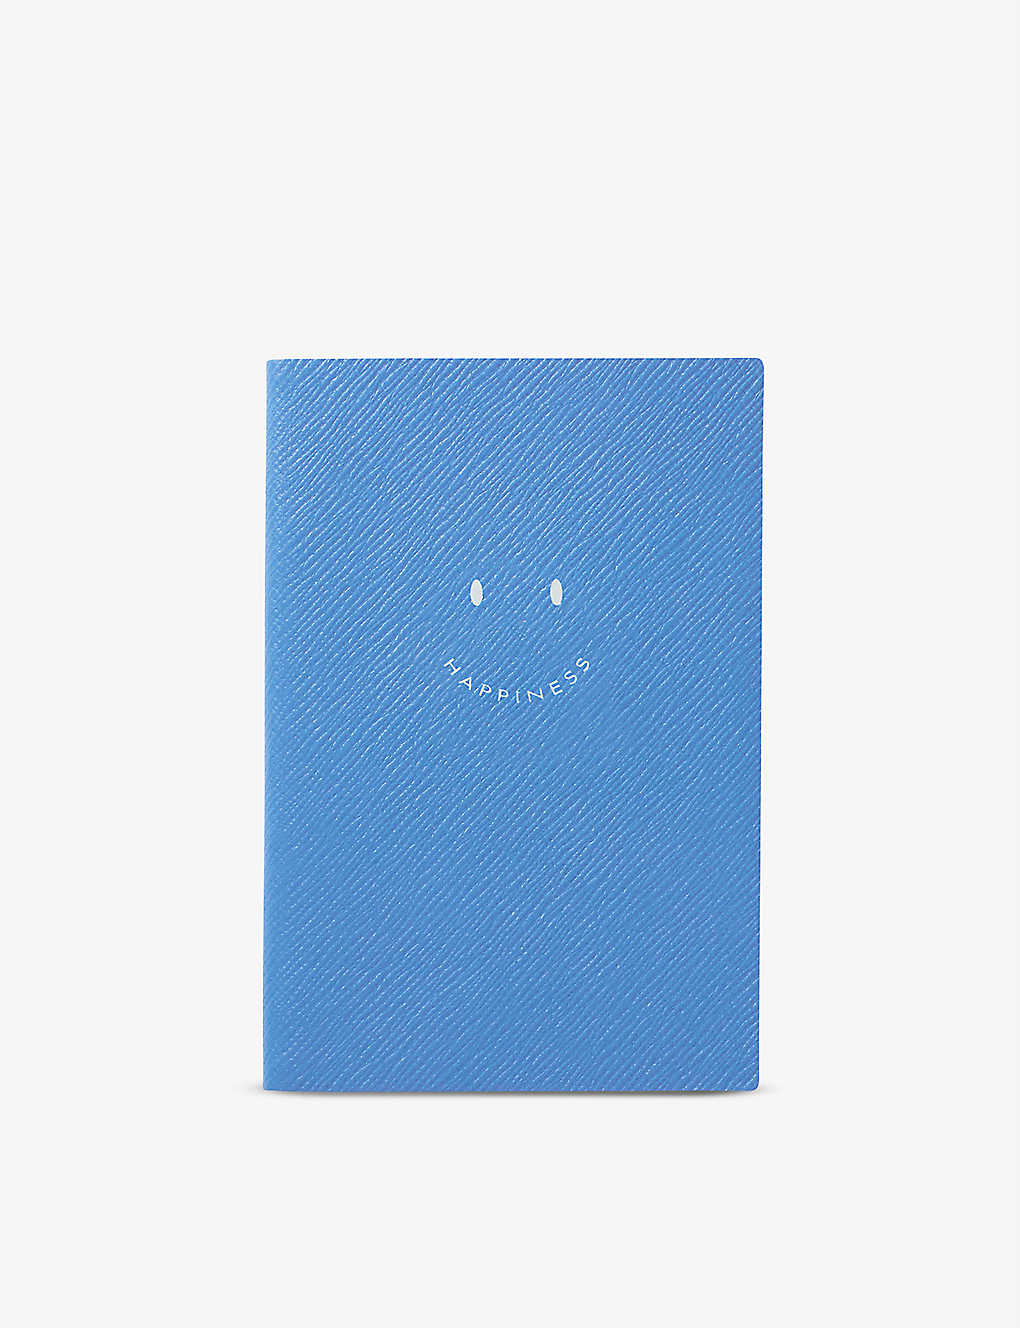 SMYTHSON ハピネス チェルシー レザー ノートブック 16.7cm x 11.2cm Happiness Chelsea leather notebook 16.7cm x 11.2cm #NILEBLUE